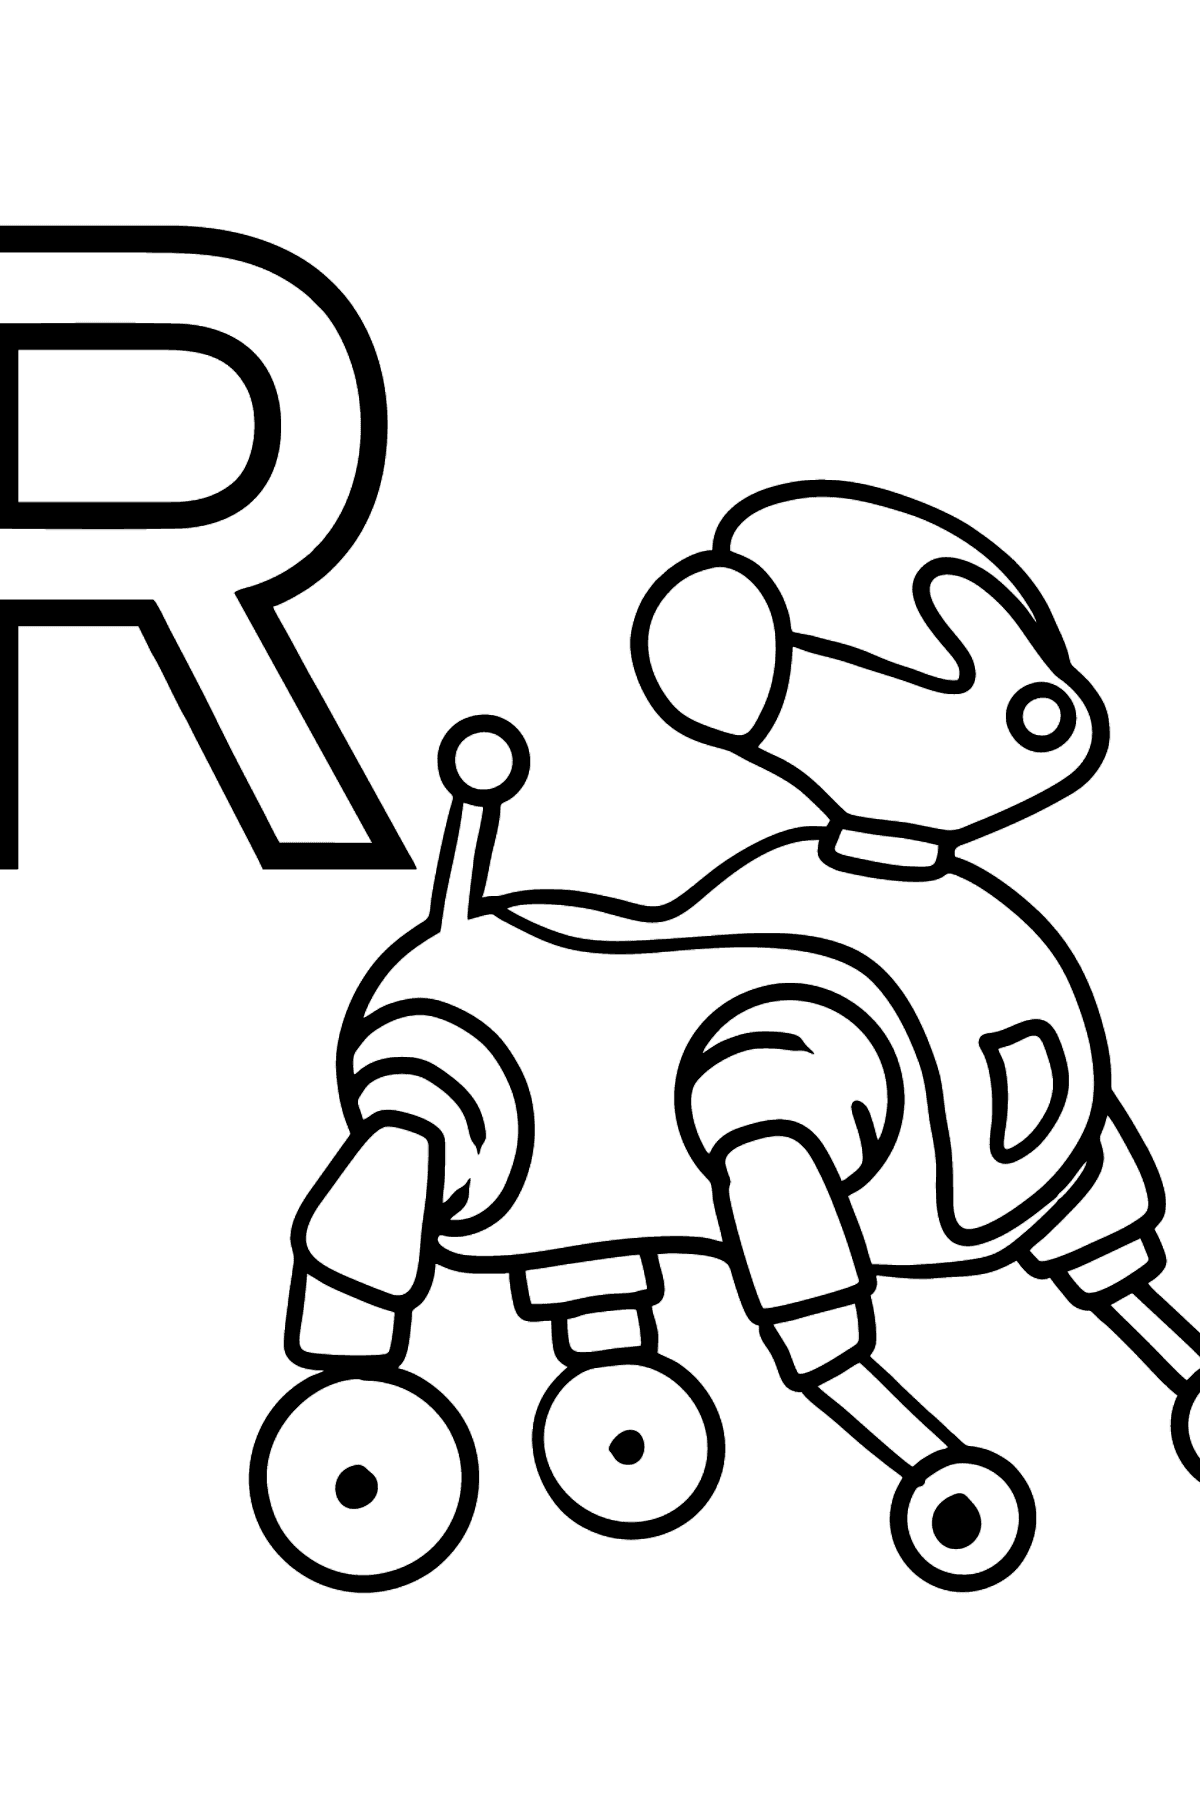 Dibujo de Letra R inglesa para colorear - ROBOT - Dibujos para Colorear para Niños